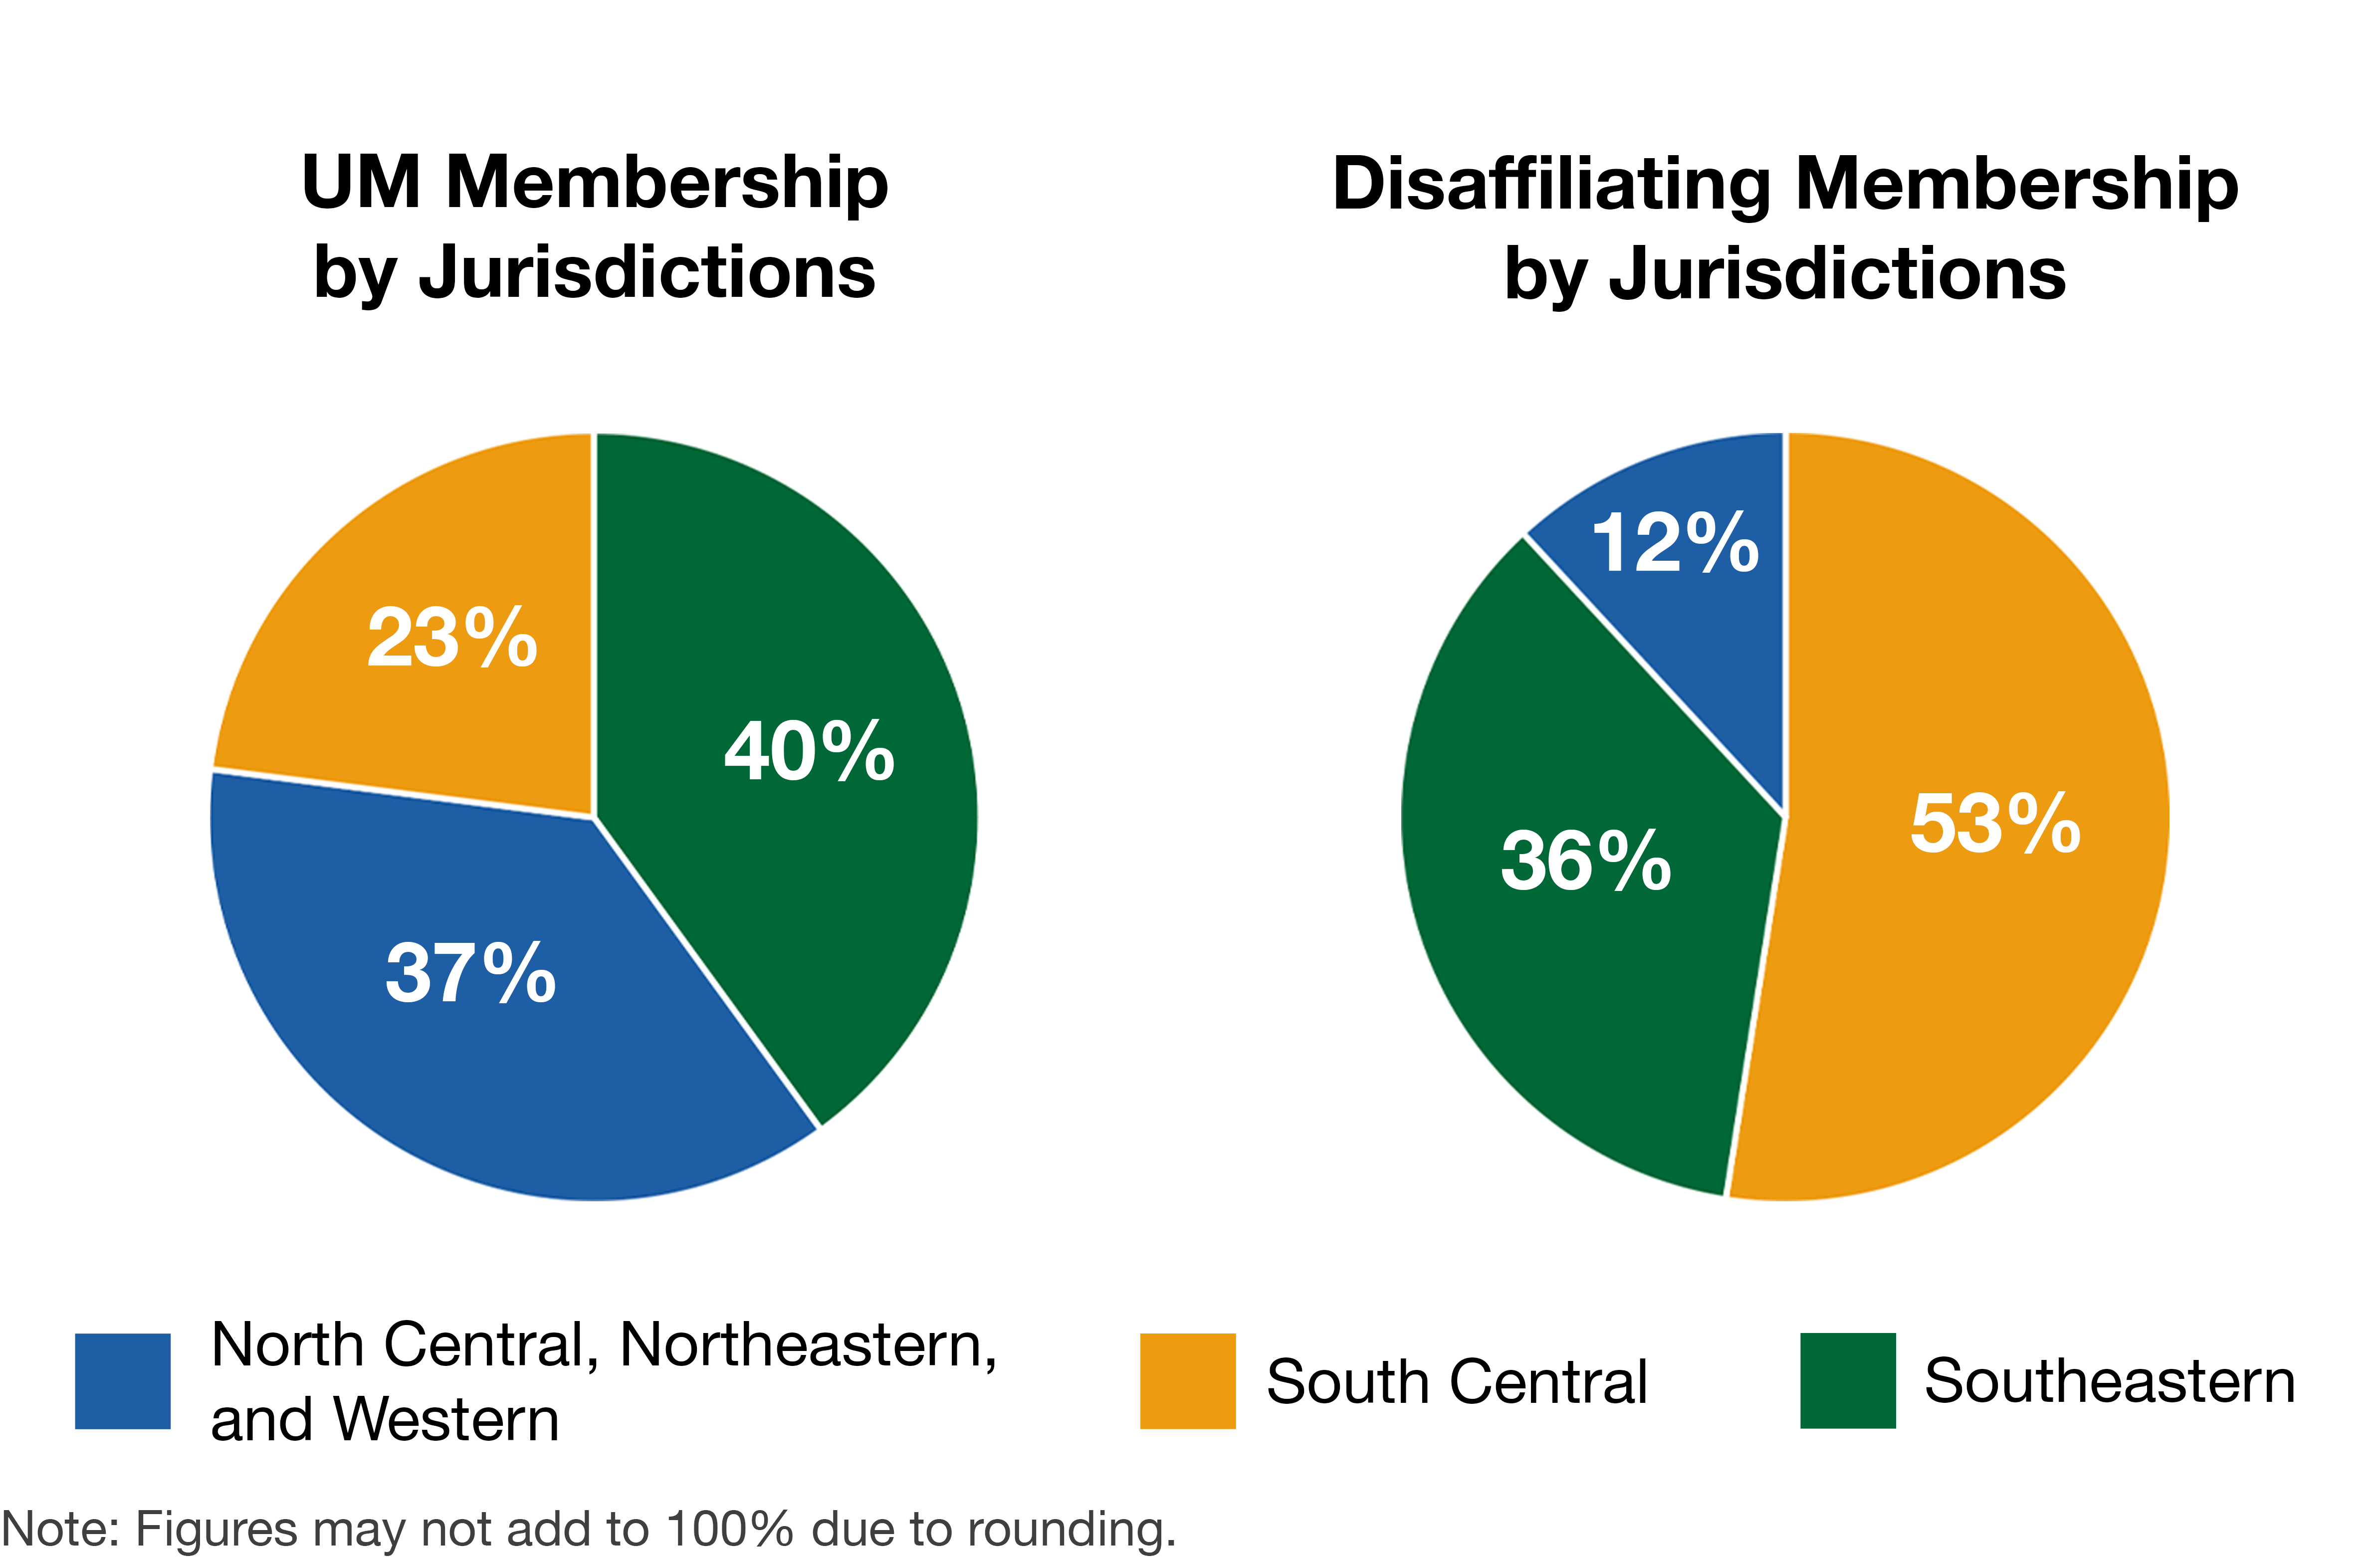 UM Membership by Jurisdictions and Disaffiliating Membership by Jurisdictions